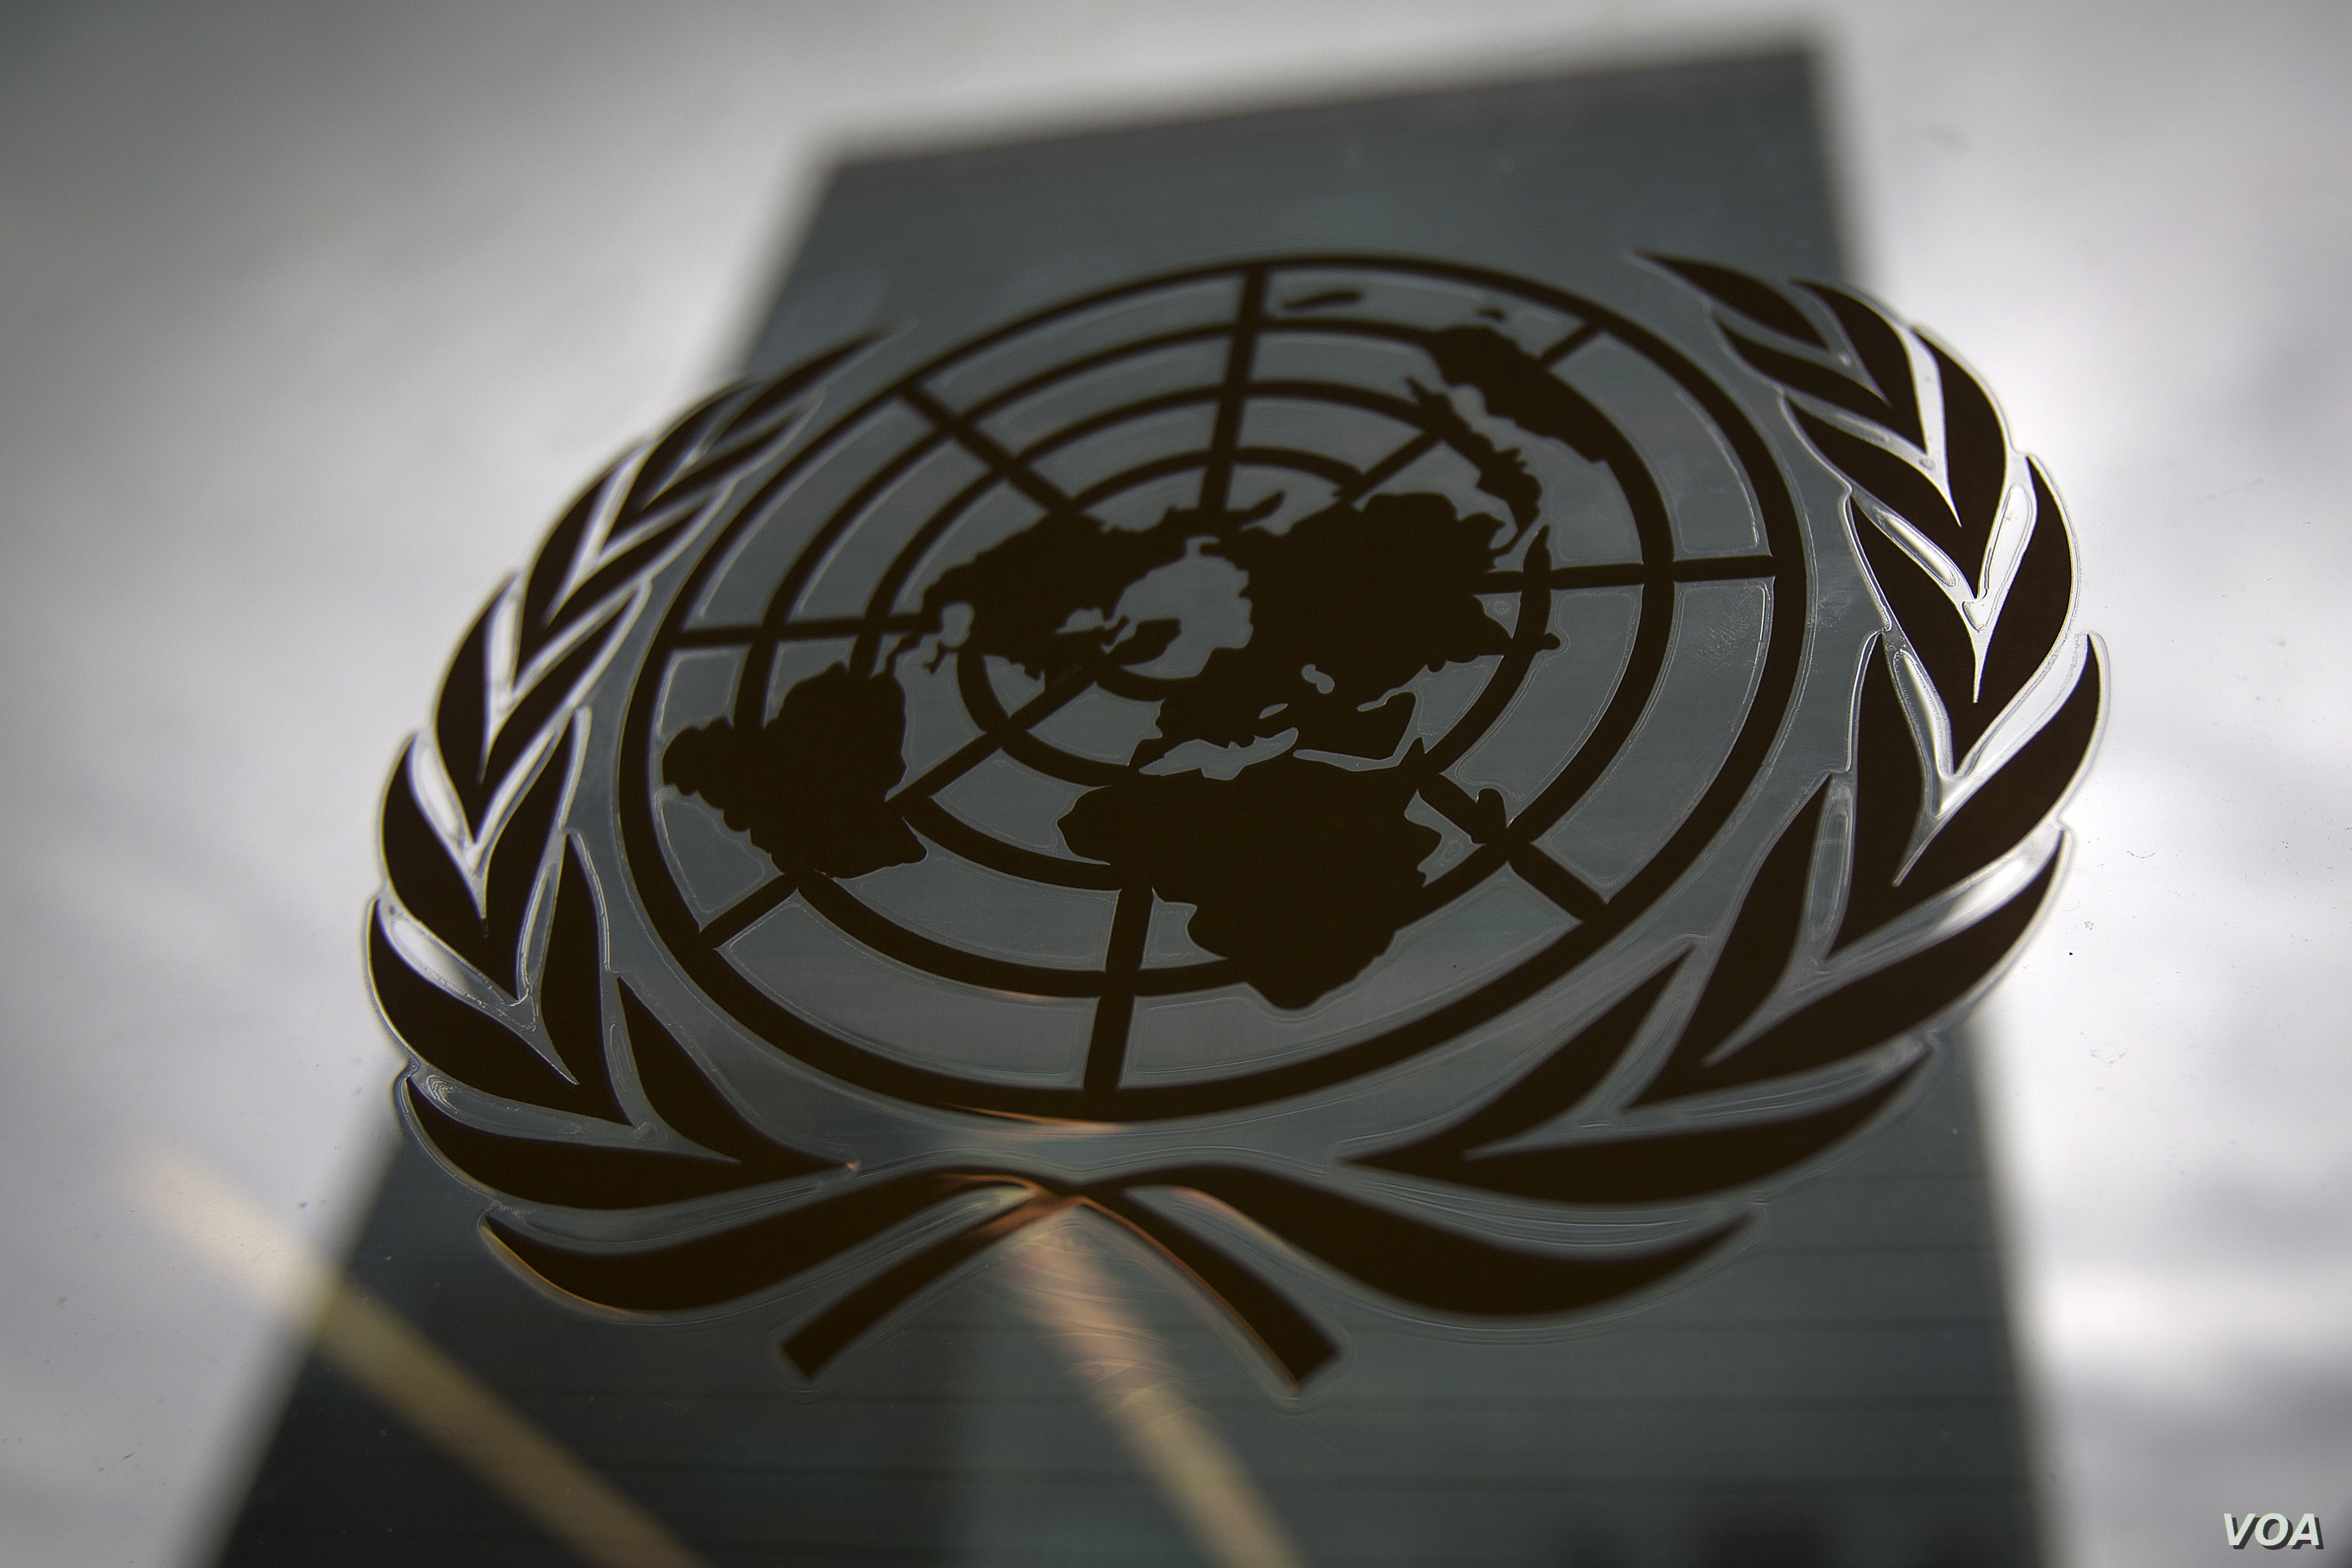 ООН подверглась кибератаке